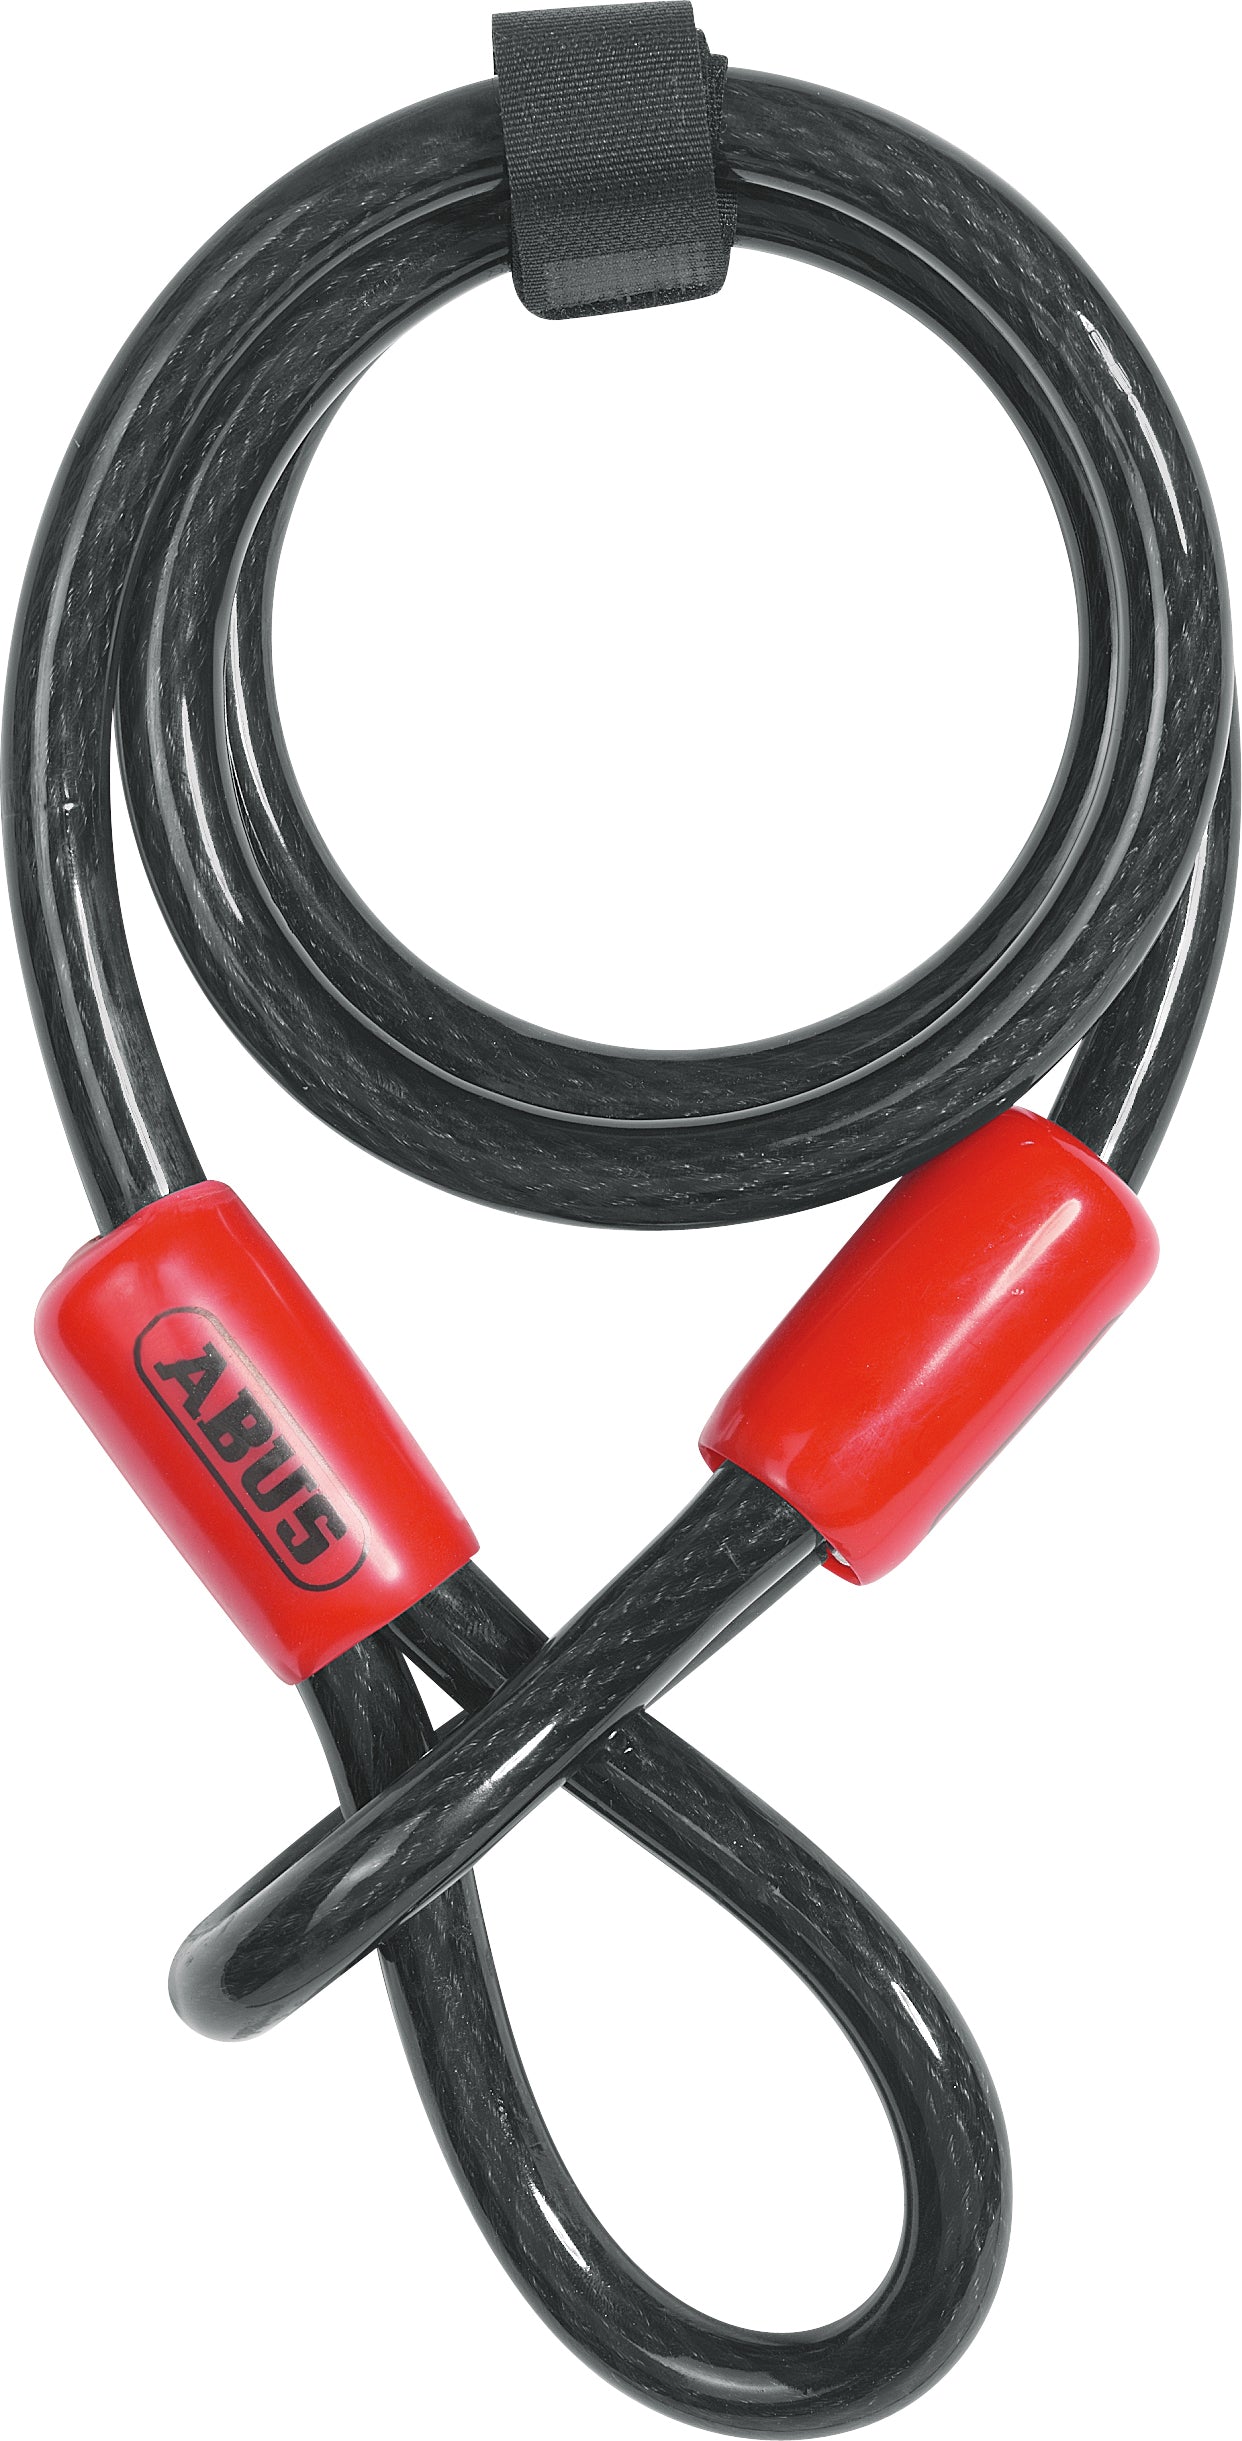 Cobra Loop Cable 4.5ft